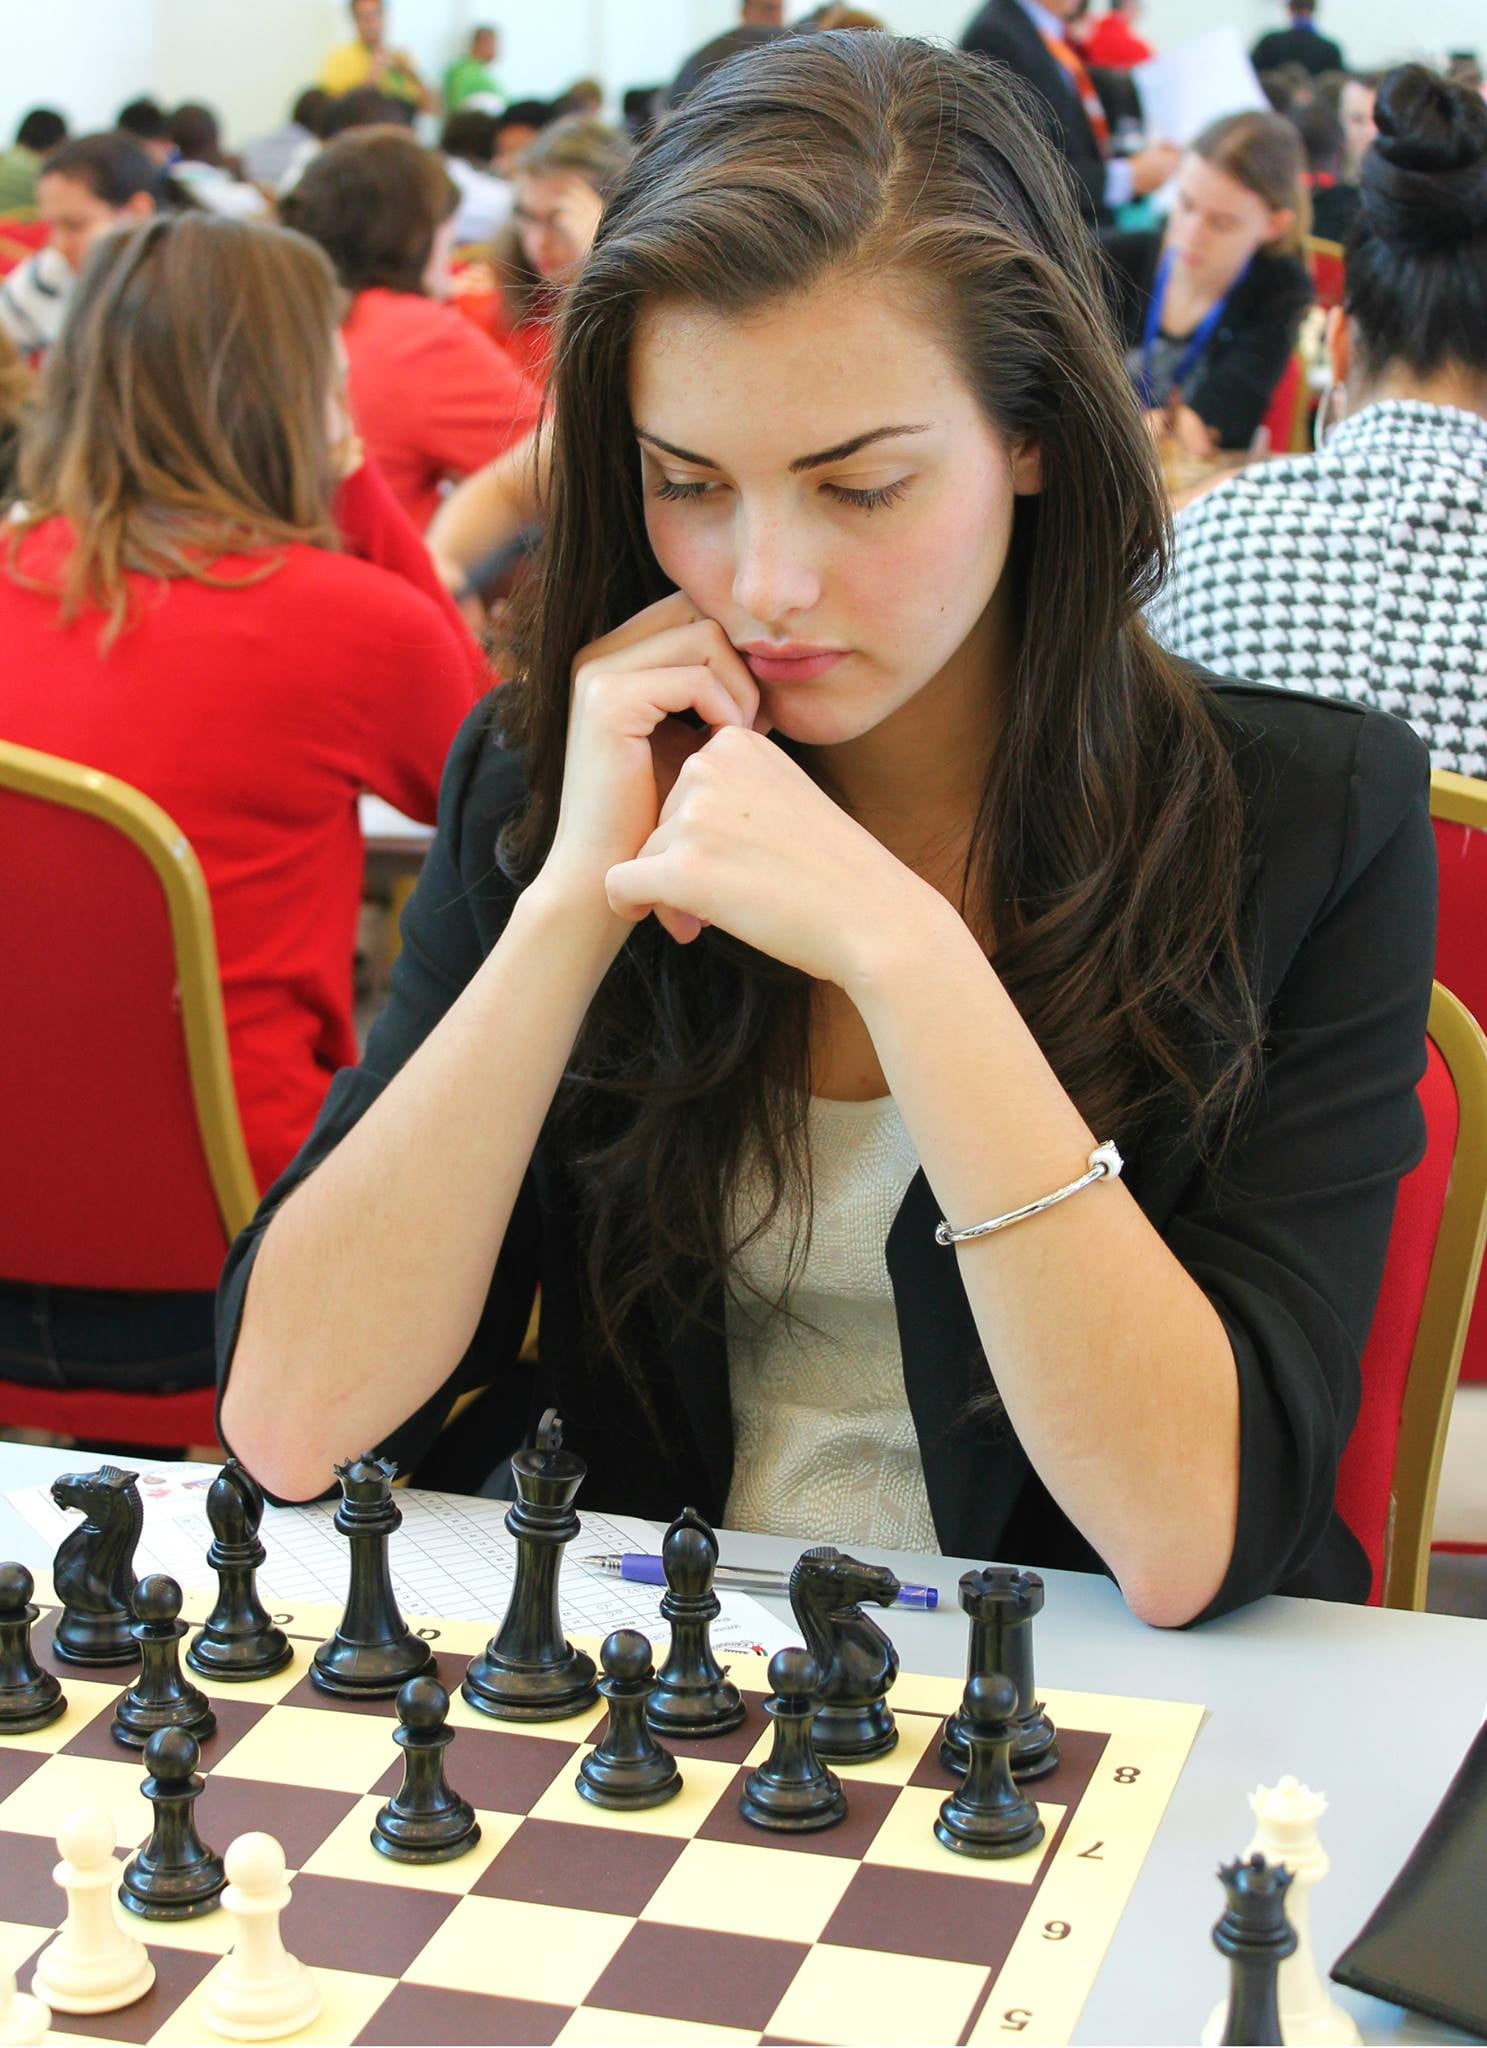 chess, women, brunette, Alexandra Botez, Canadian, vest, long hair